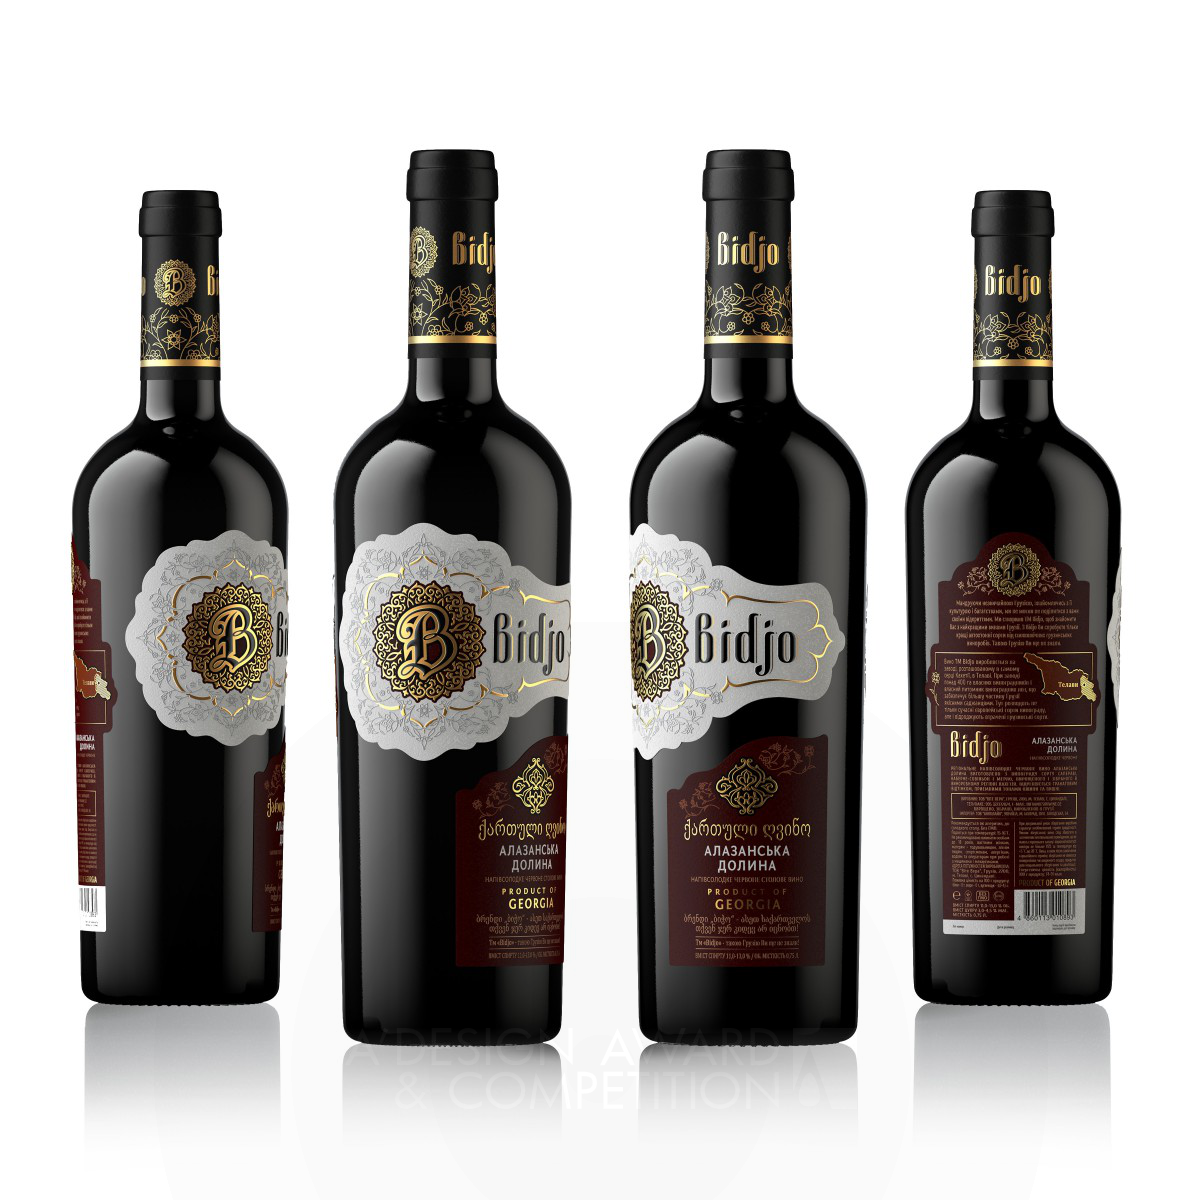 Bidjo Wines Label by Valerii Sumilov